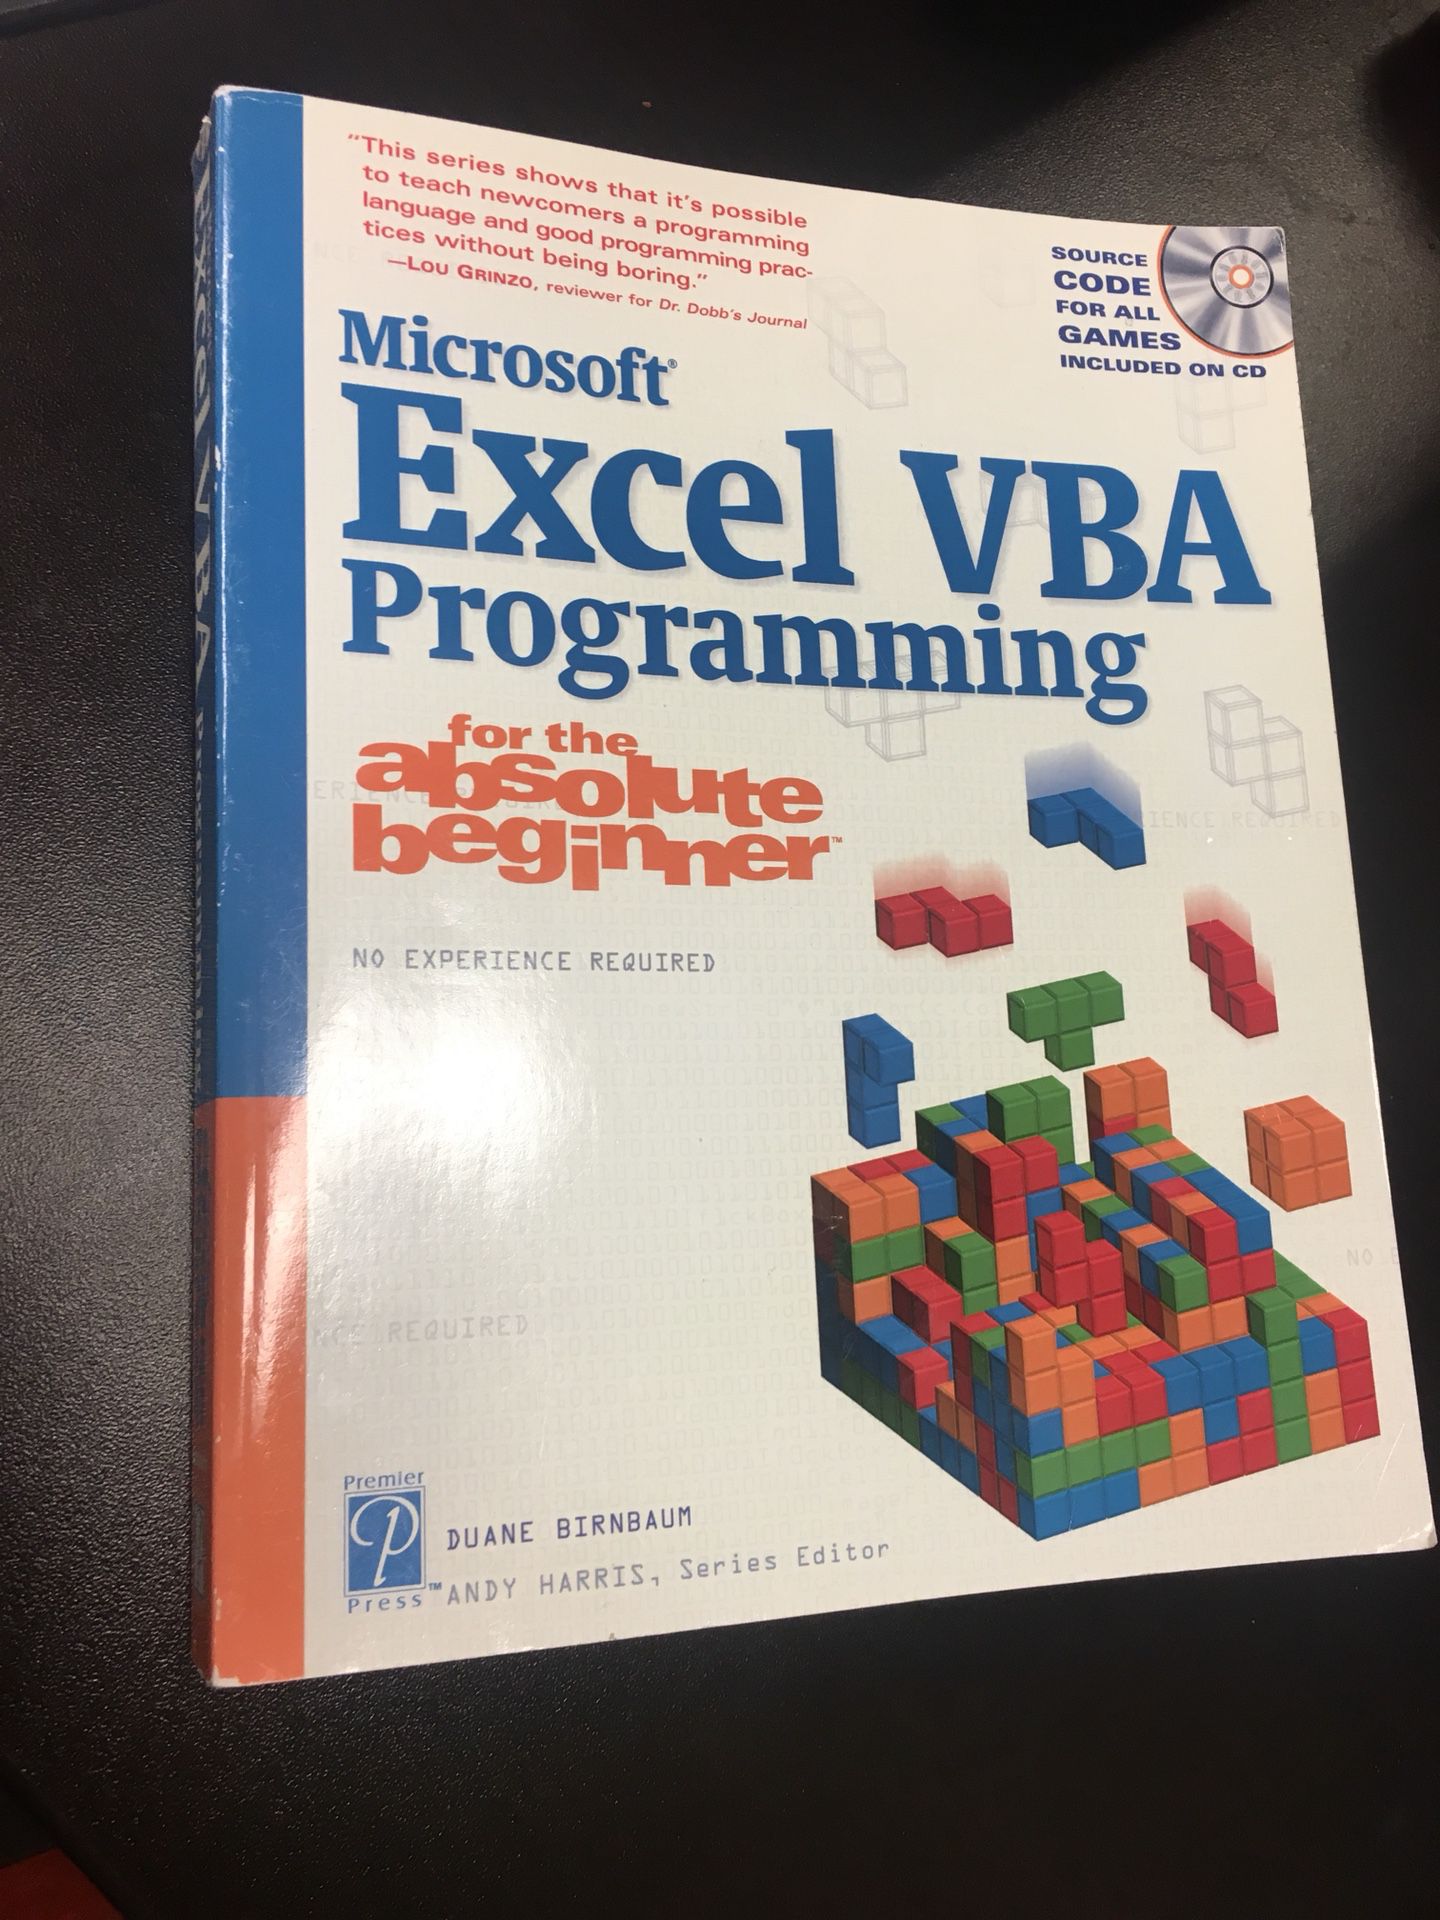 Excel VBA programming book